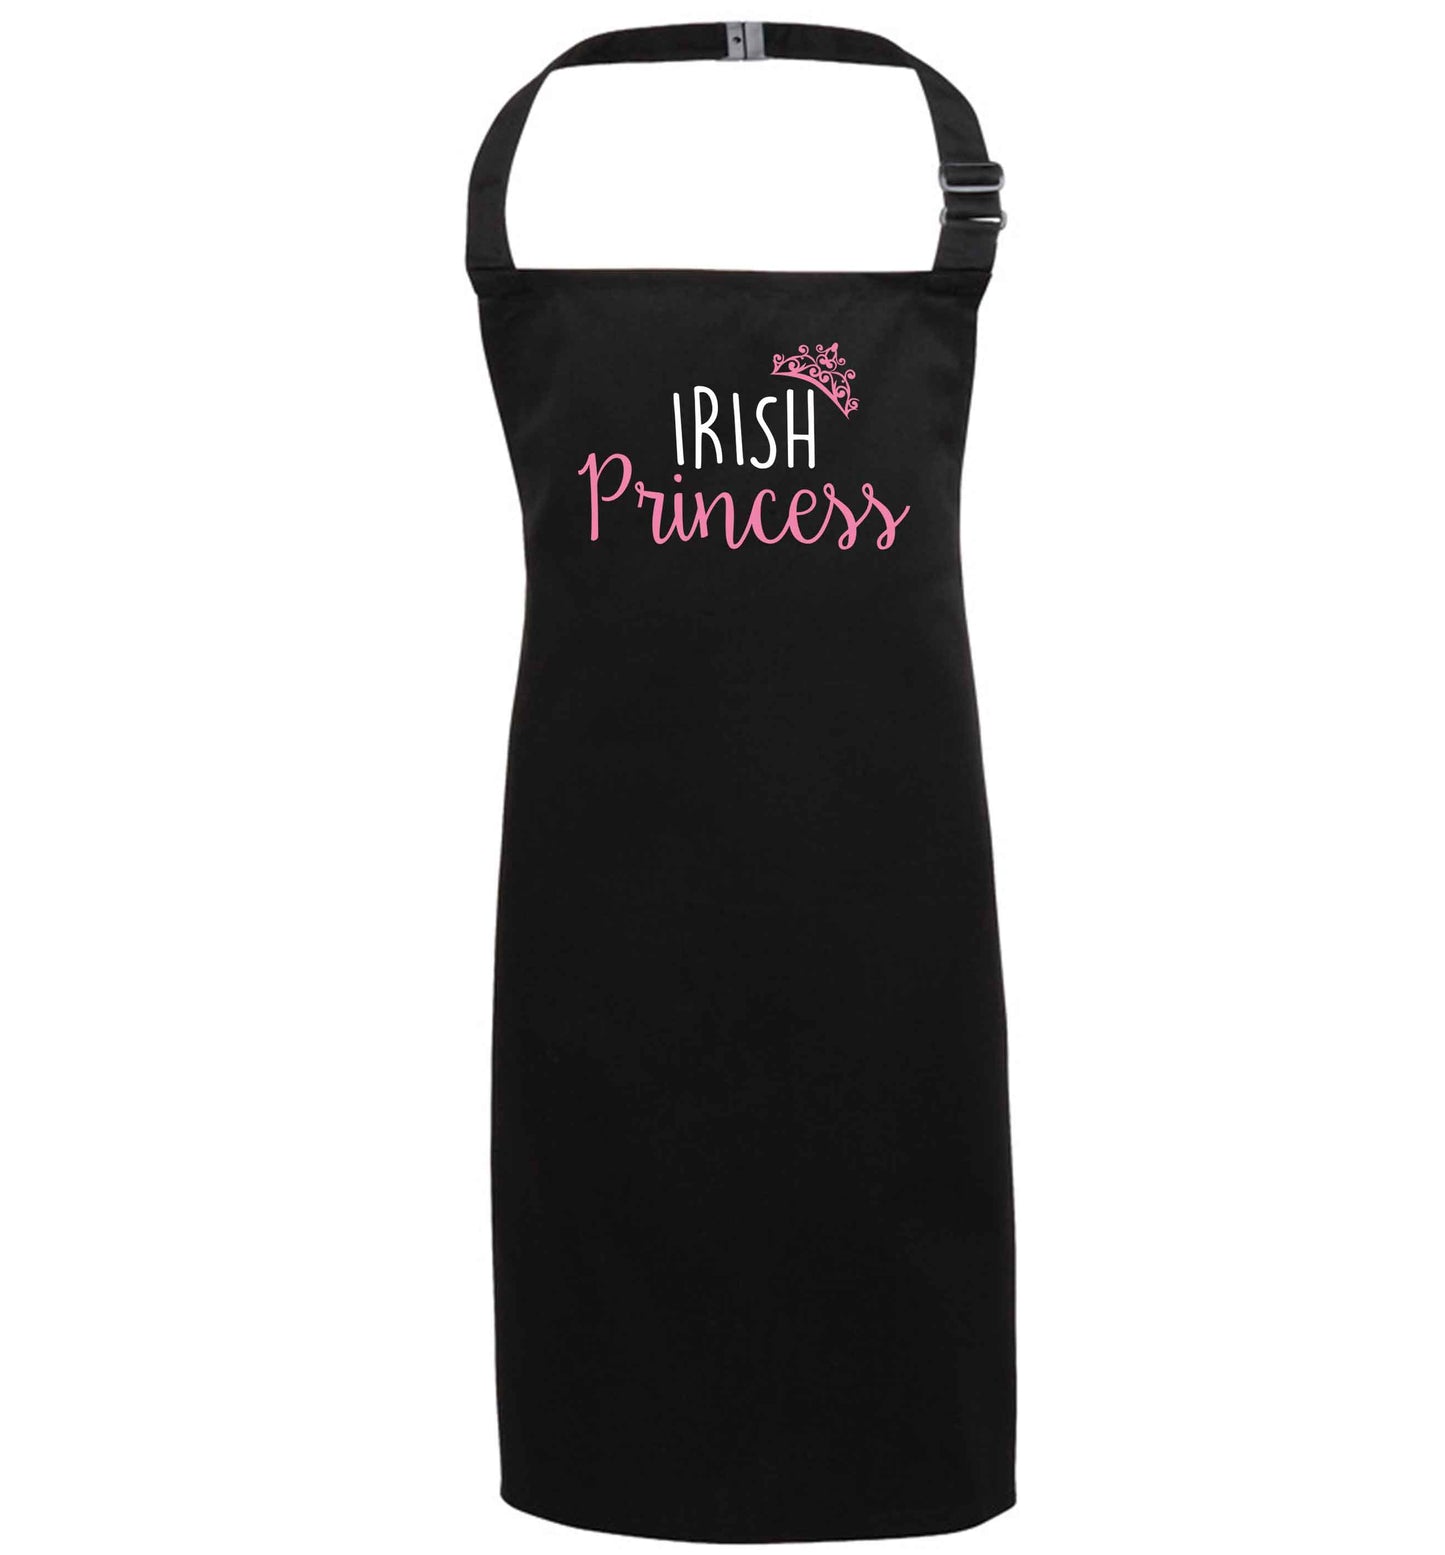 Irish princess black apron 7-10 years